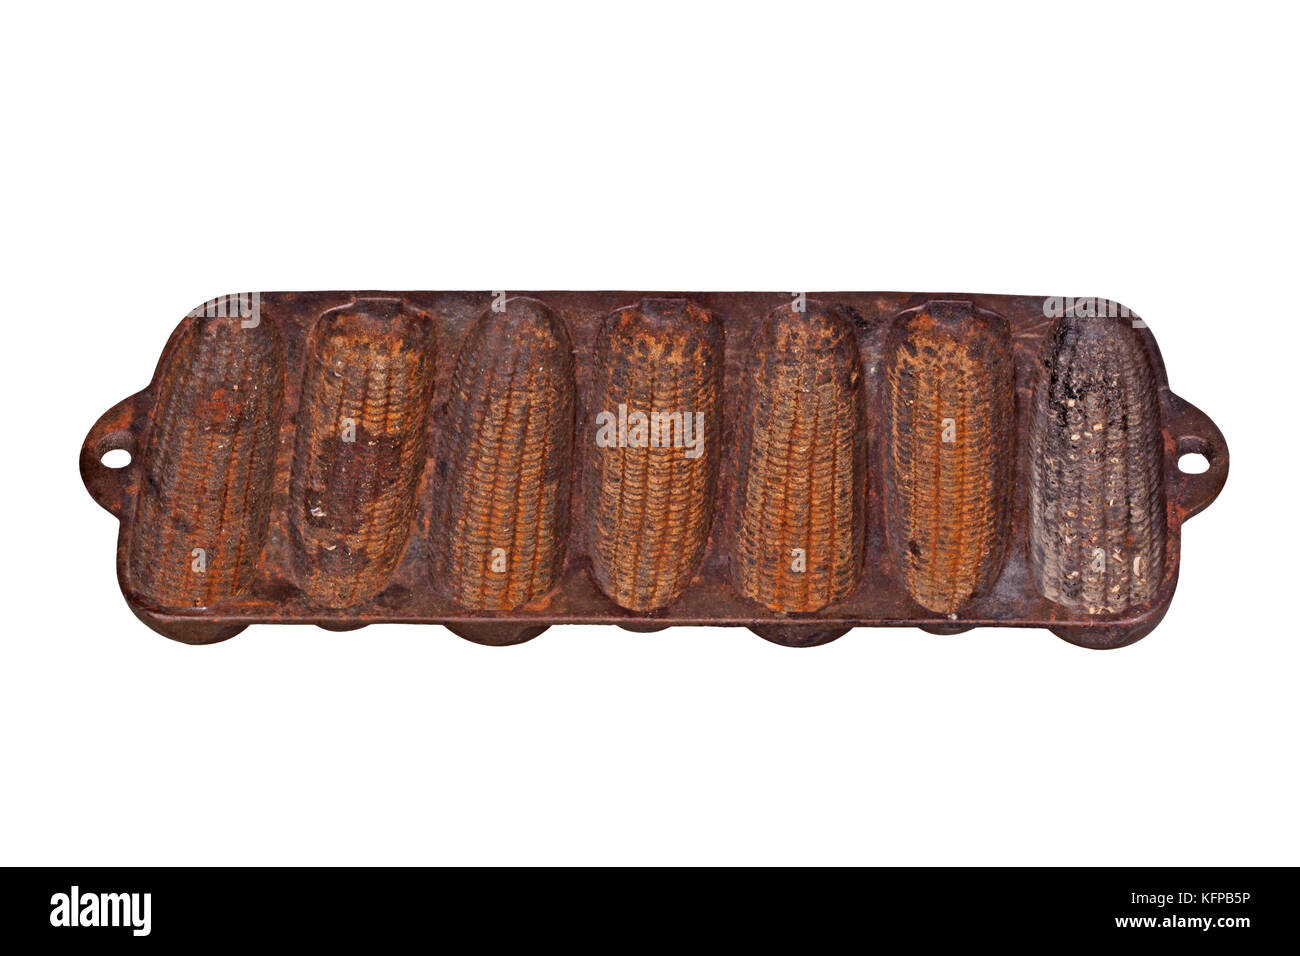 https://c8.alamy.com/comp/KFPB5P/old-rusty-cast-iron-pan-for-baking-cornbread-sticks-in-the-shape-of-KFPB5P.jpg